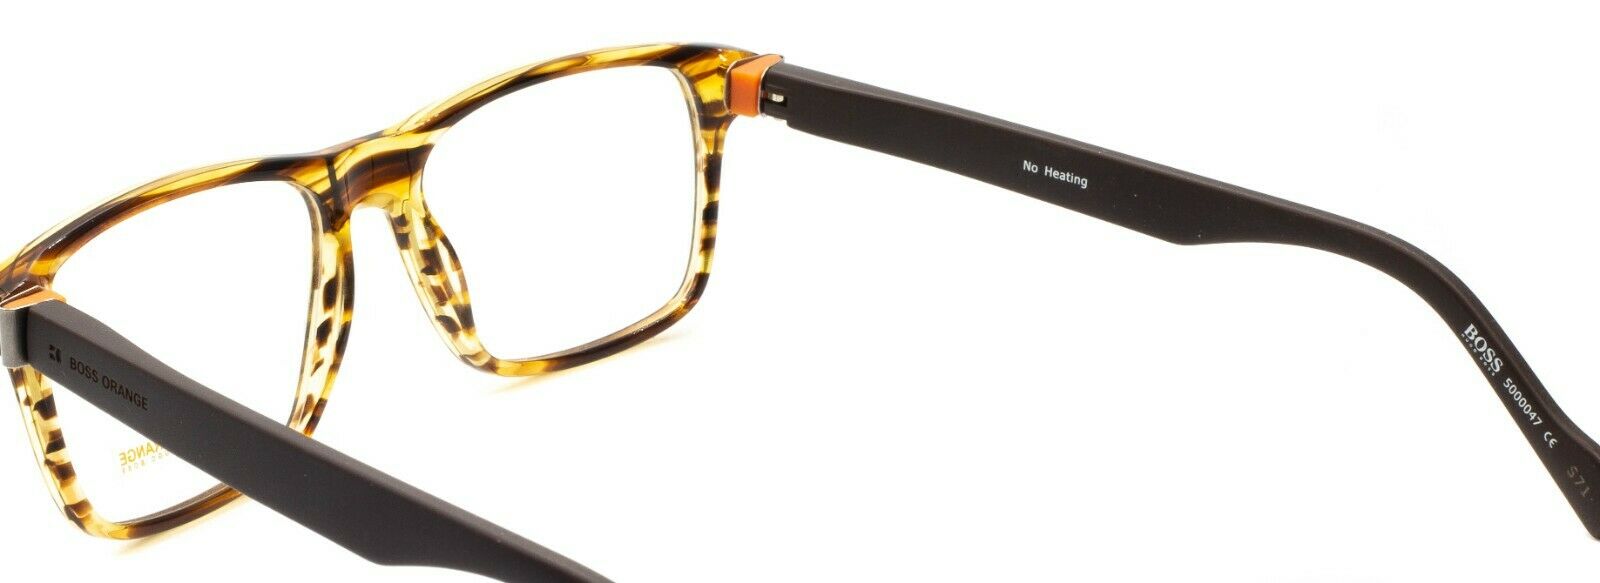 BO FRAMES Eyewear - BOSS Glasses Eyewear 0146 54mm GGV RX 30265400 Eyeglasses ORANGE Optical